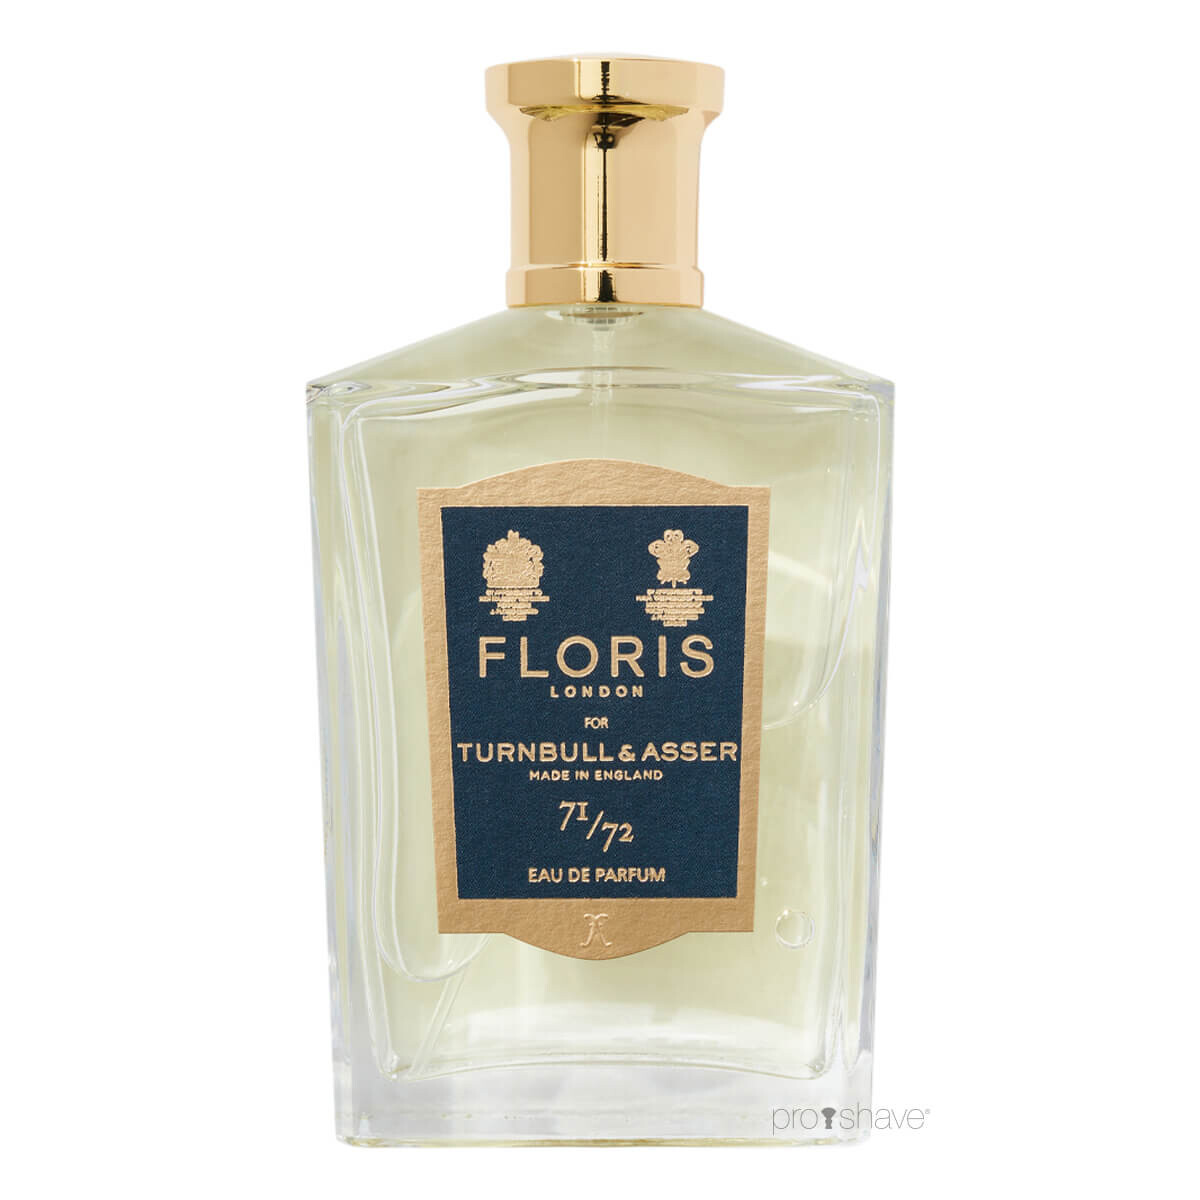 Billede af Floris x Turnbull & Asser 71/72, Eau de Parfum, 100 ml.